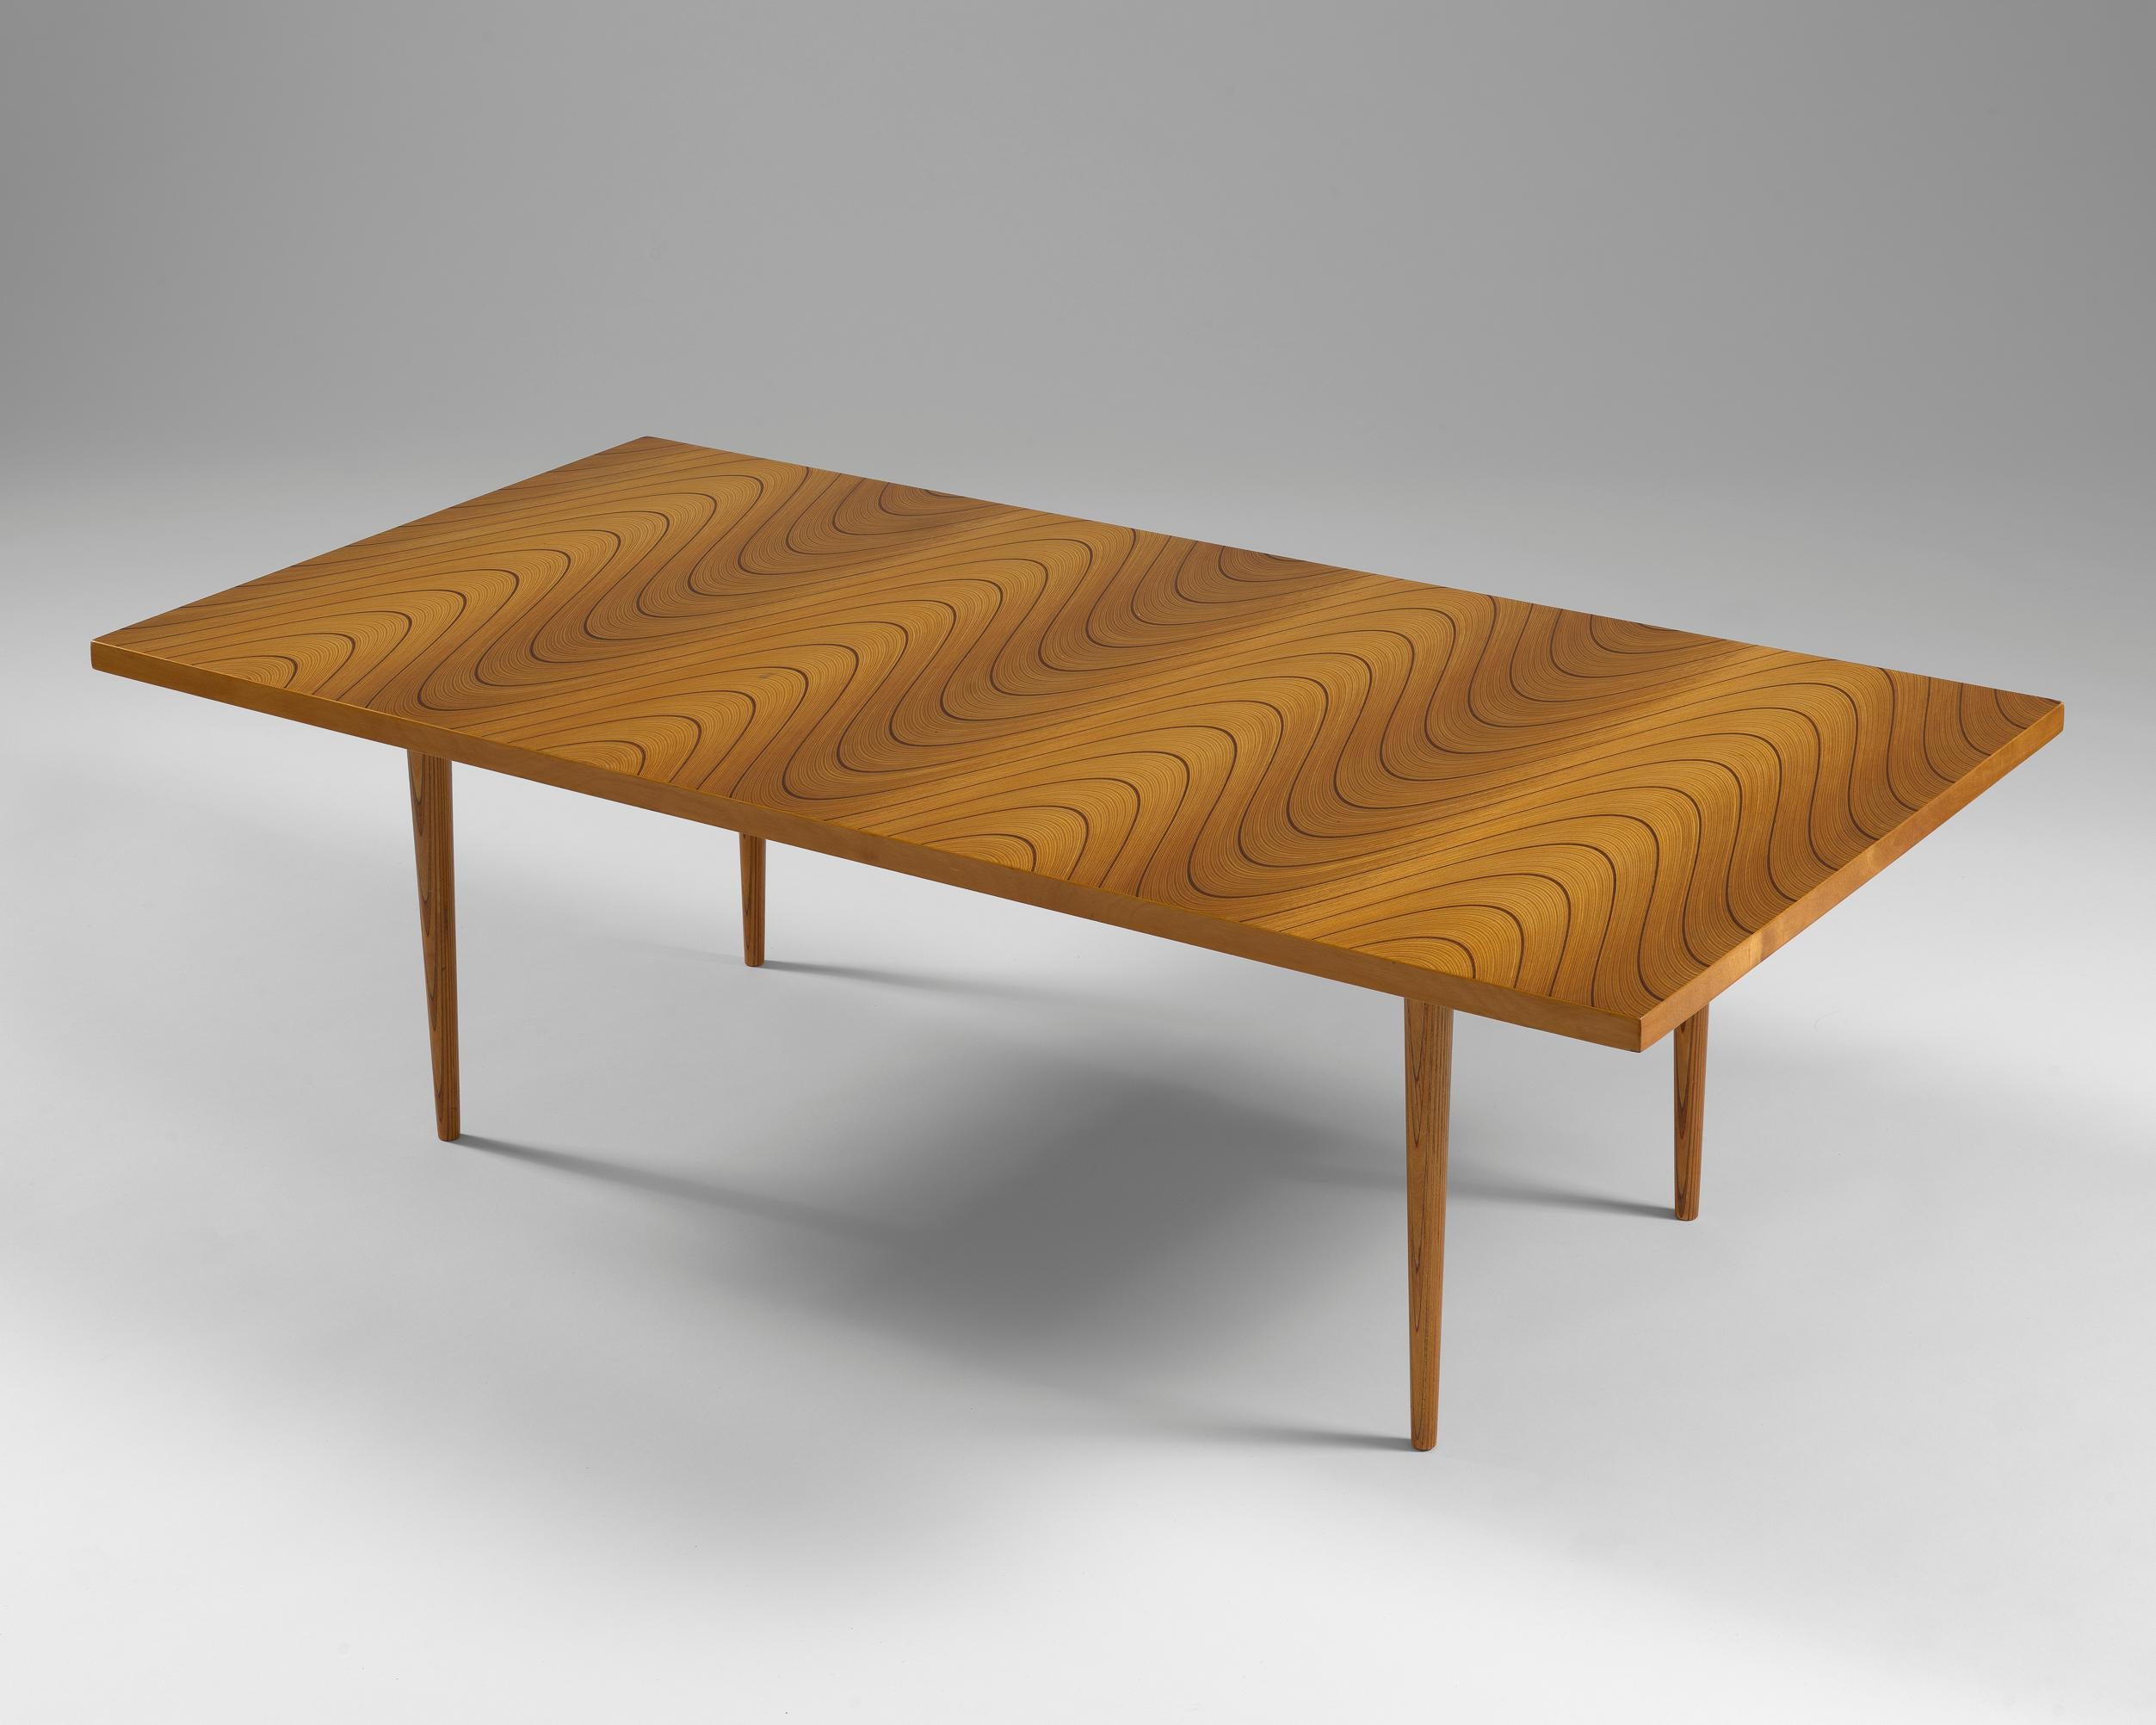 Occasional Table “Rhythmic Plywood” Designed by Tapio Wirkkala for Asko, Finland 3